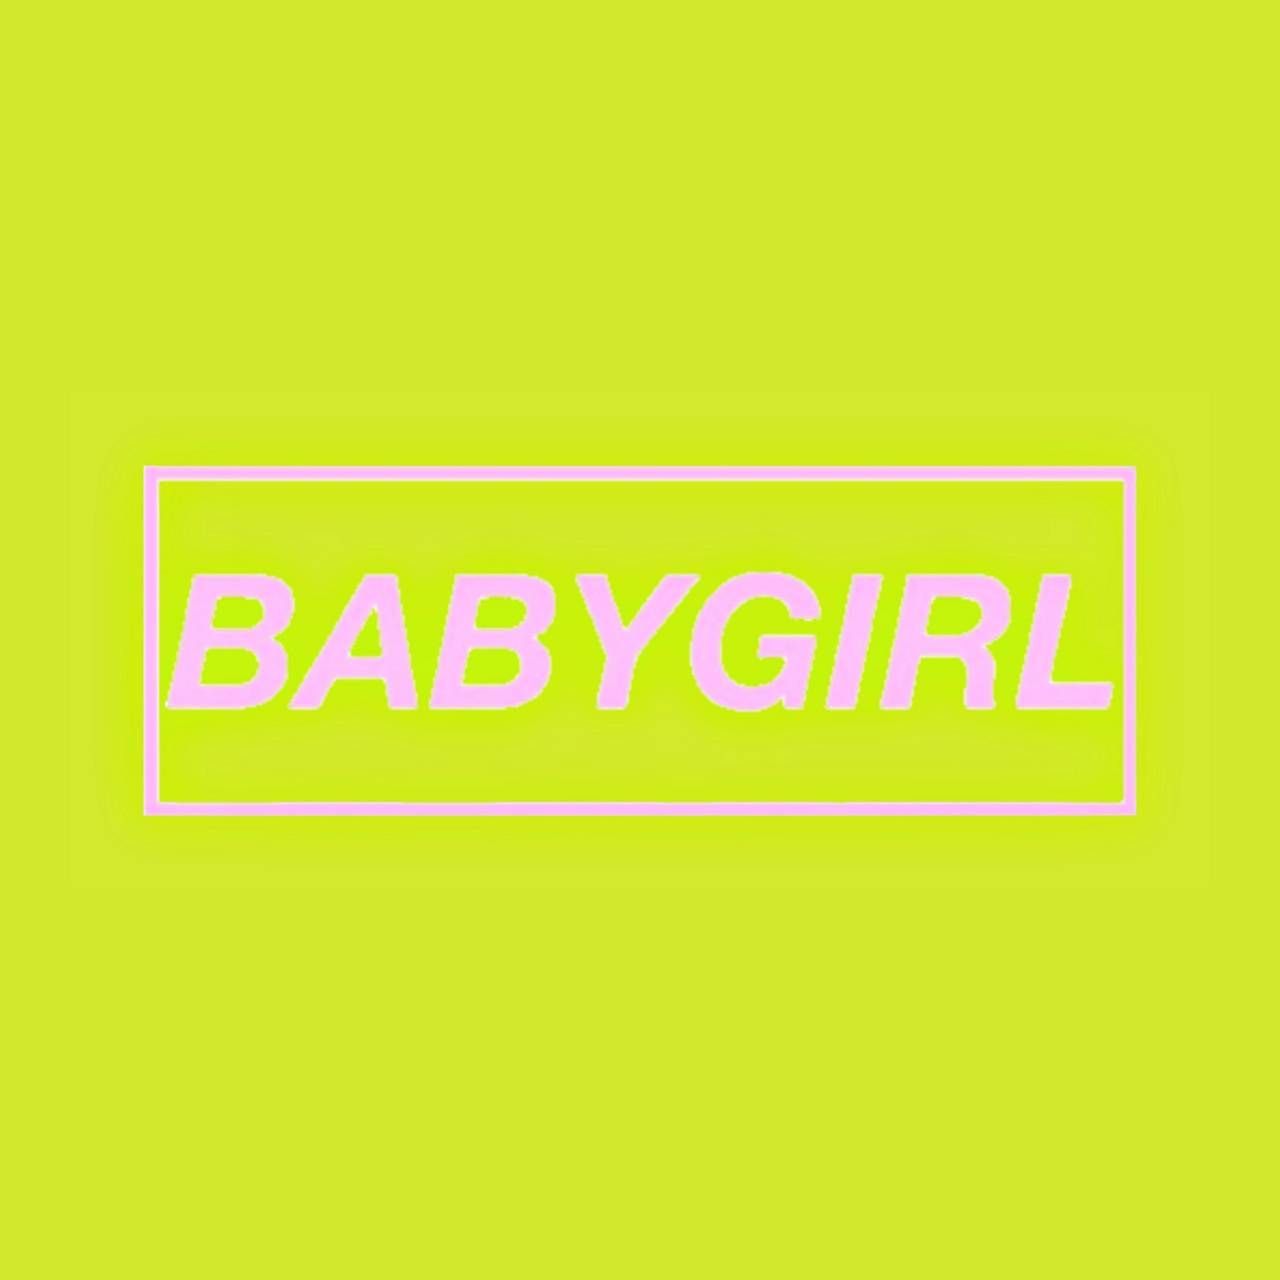 Baby girl wallpaper